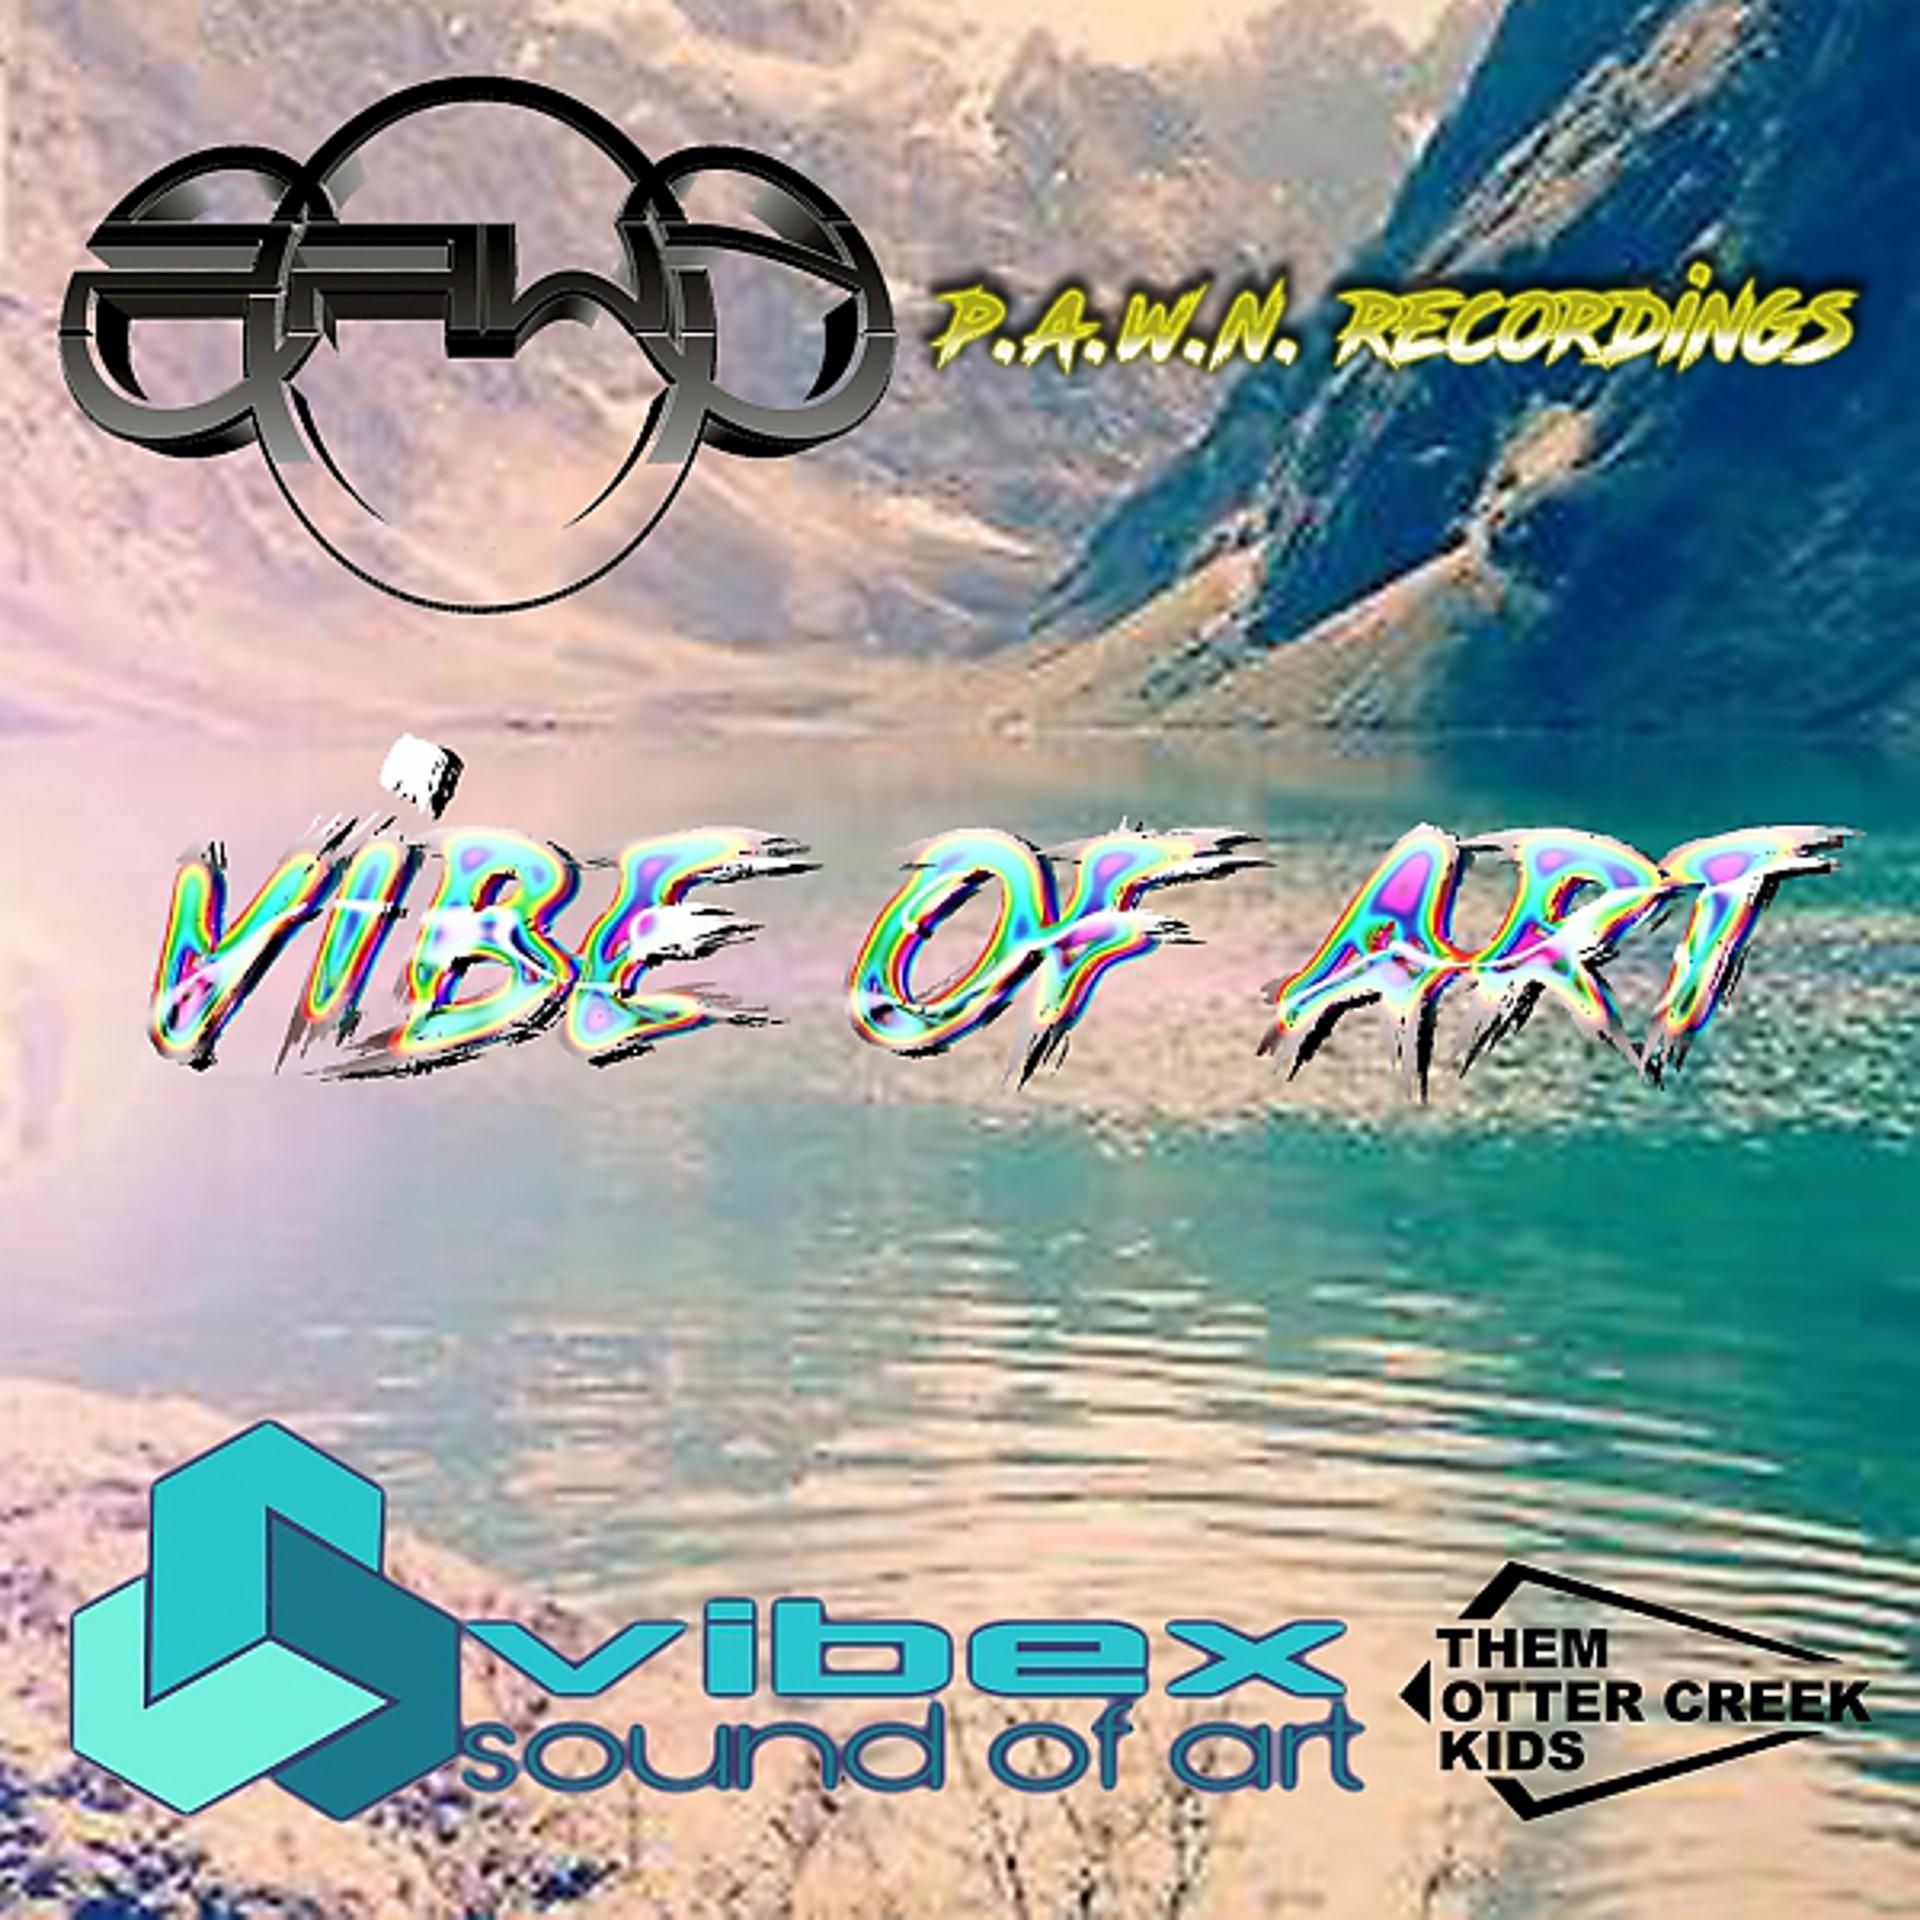 Постер альбома Vibe of Art